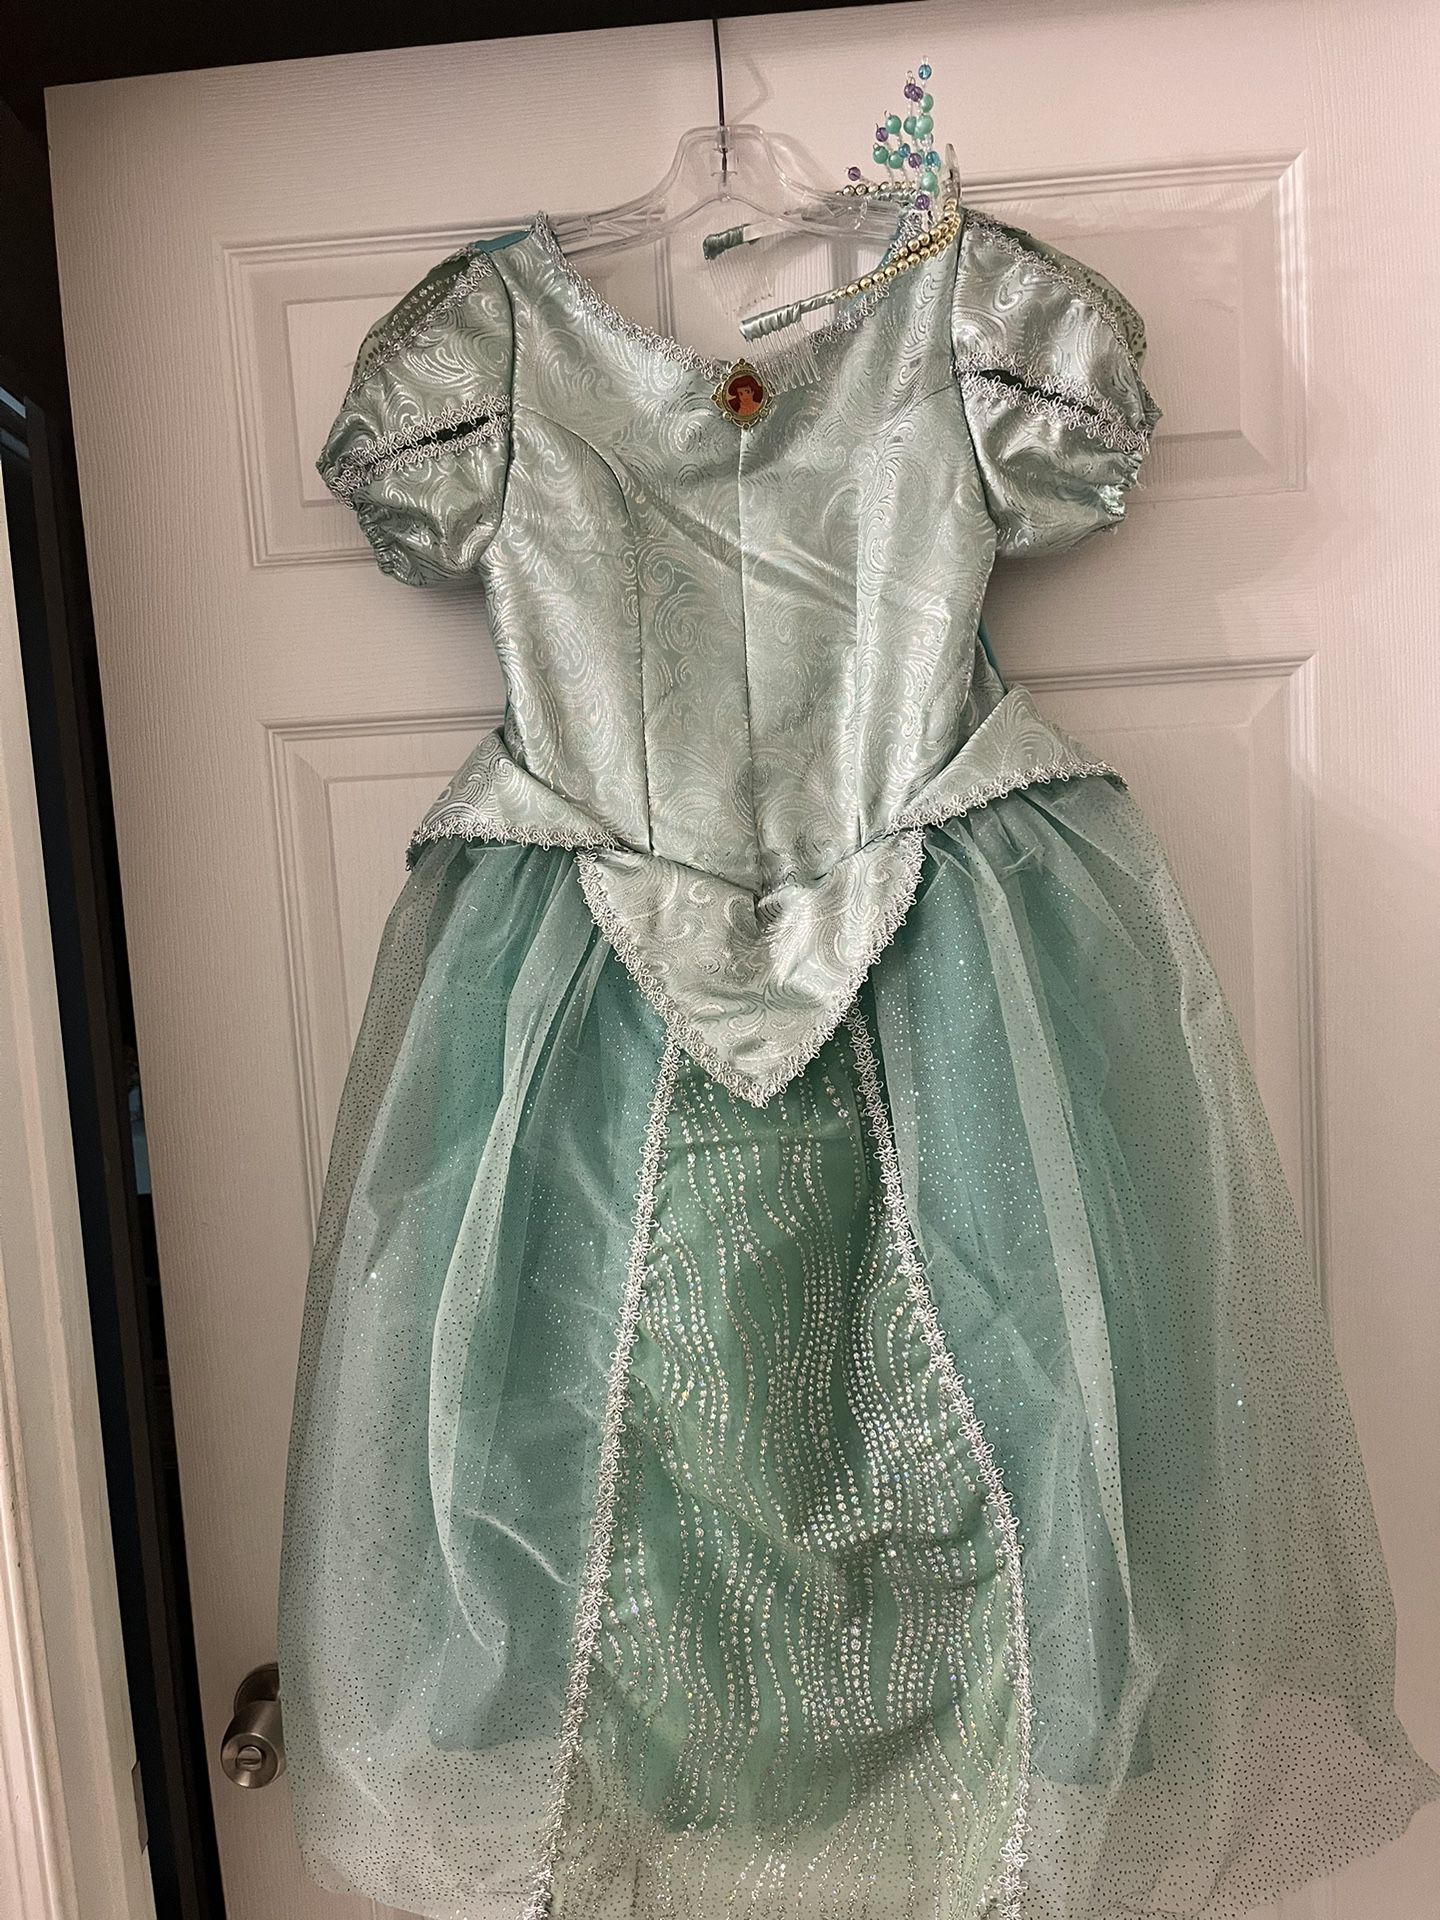 Mermaid Gala Dress